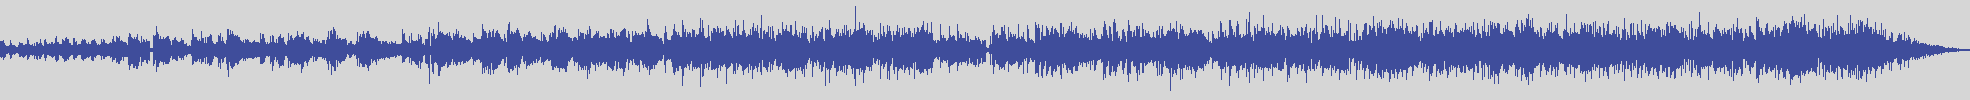 digiphonic_records [DPR013] Little Tony - Ritornerà [Original Mix] audio wave form